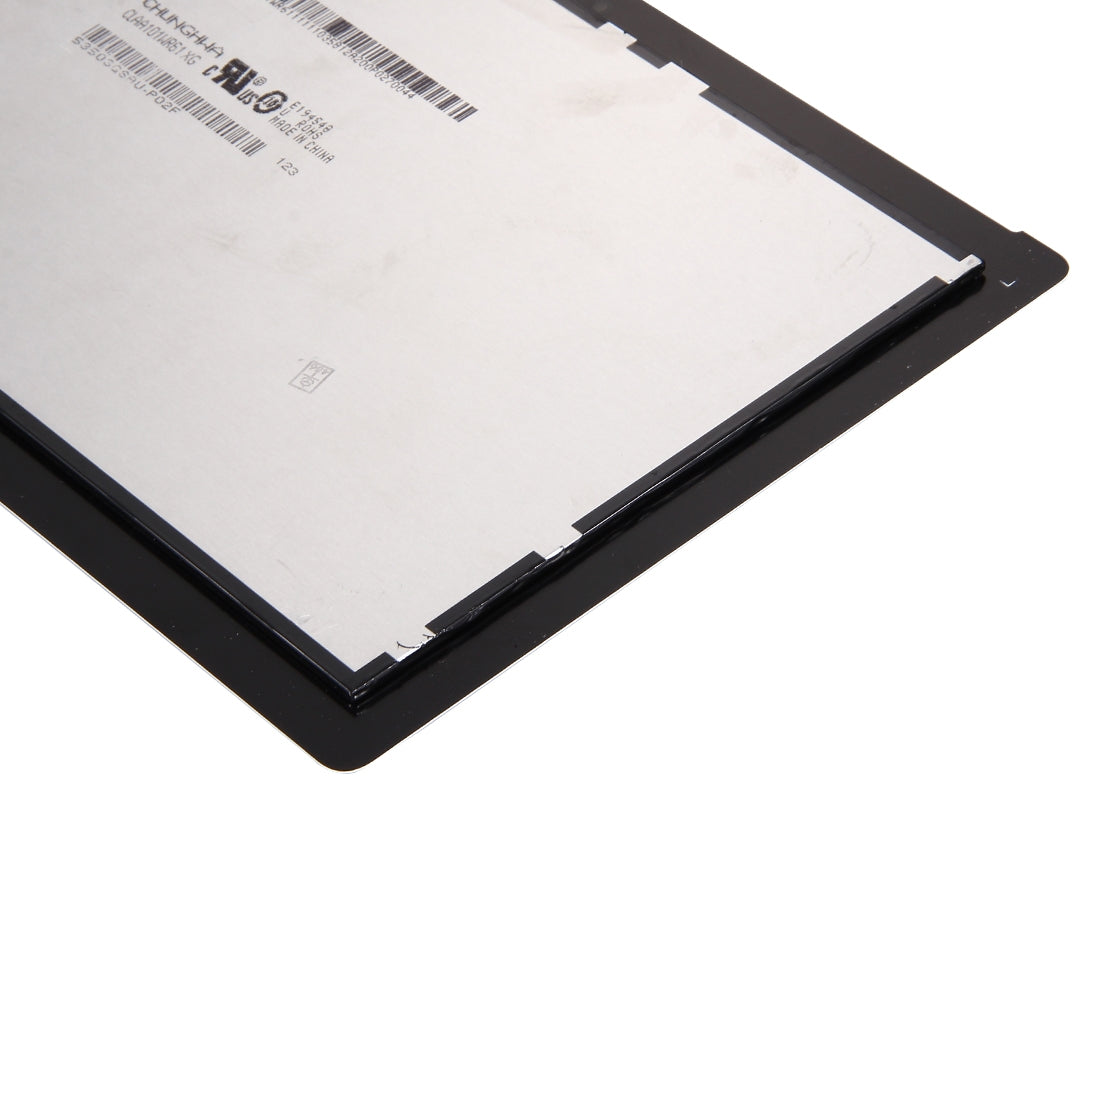 Pantalla LCD + Tactil Digitalizador Asus ZenPad 10 Z300C Z300CG P023 Blanco